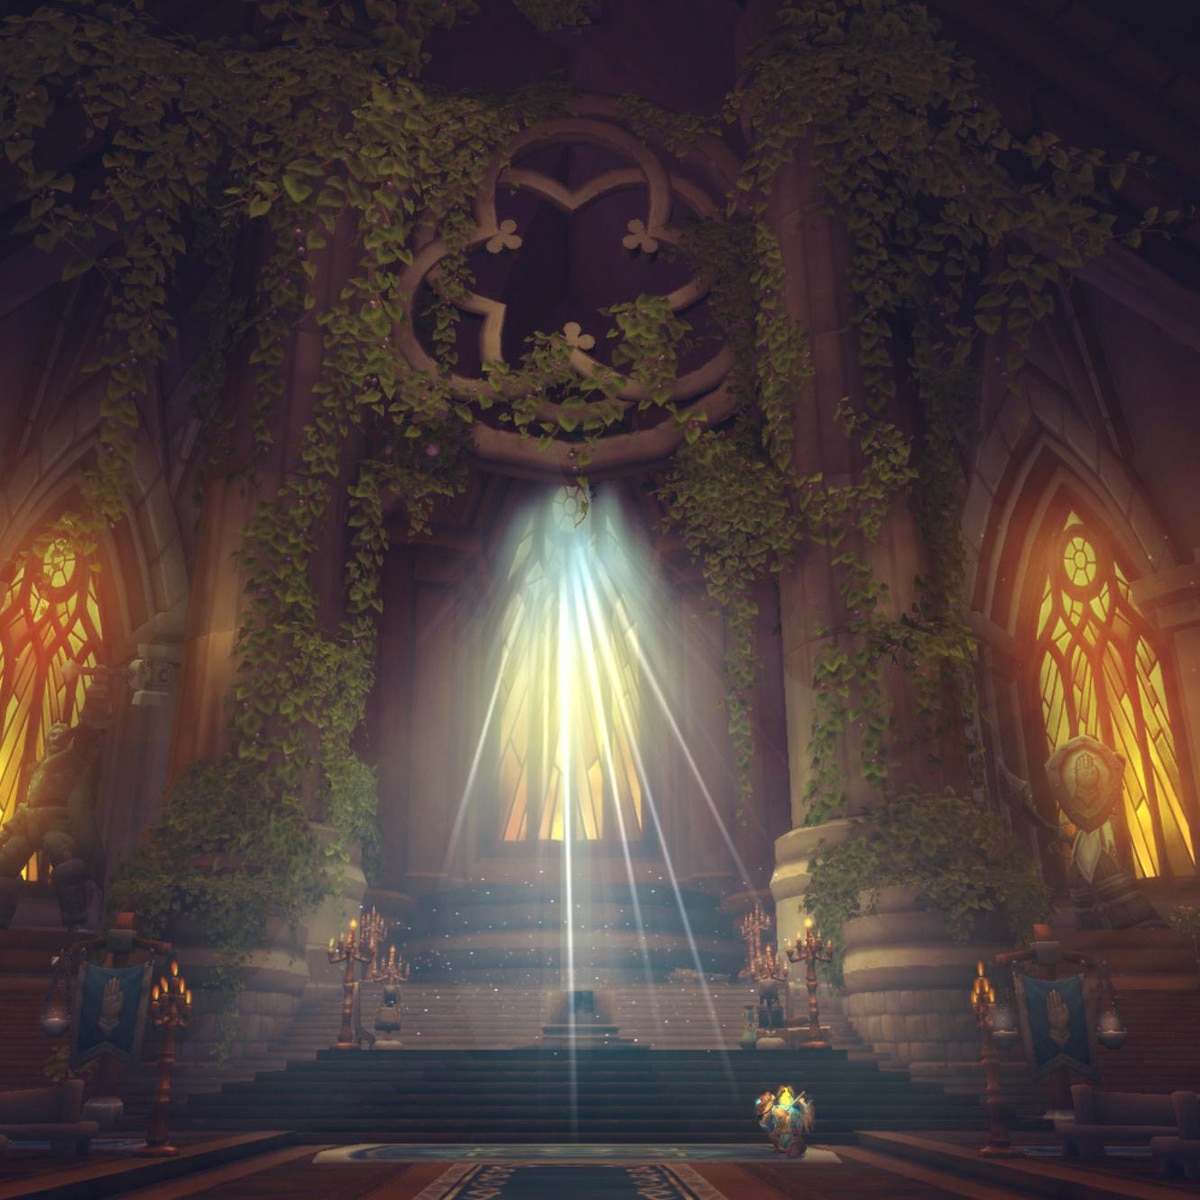 World of Warcraft - The Paladin Order Hall - Sanctume of Light - animated